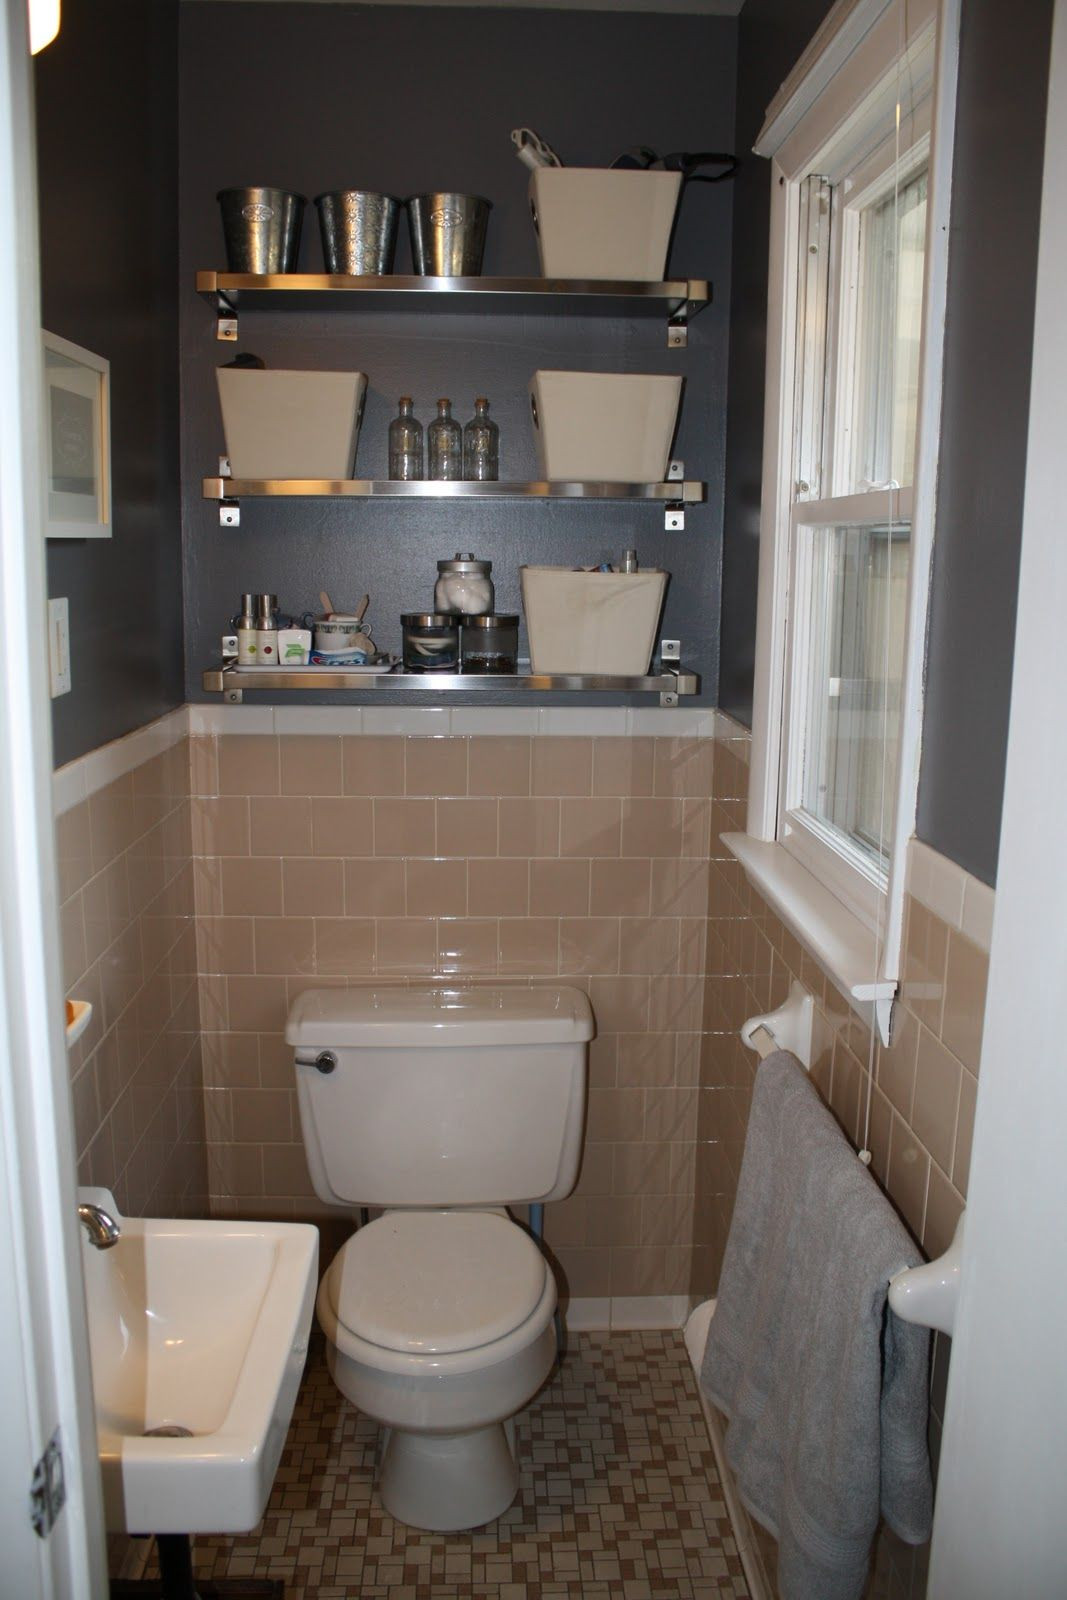 Peach Tile Bathroom
 Peach tile bathroom with grey walls plus fun shiny shelves